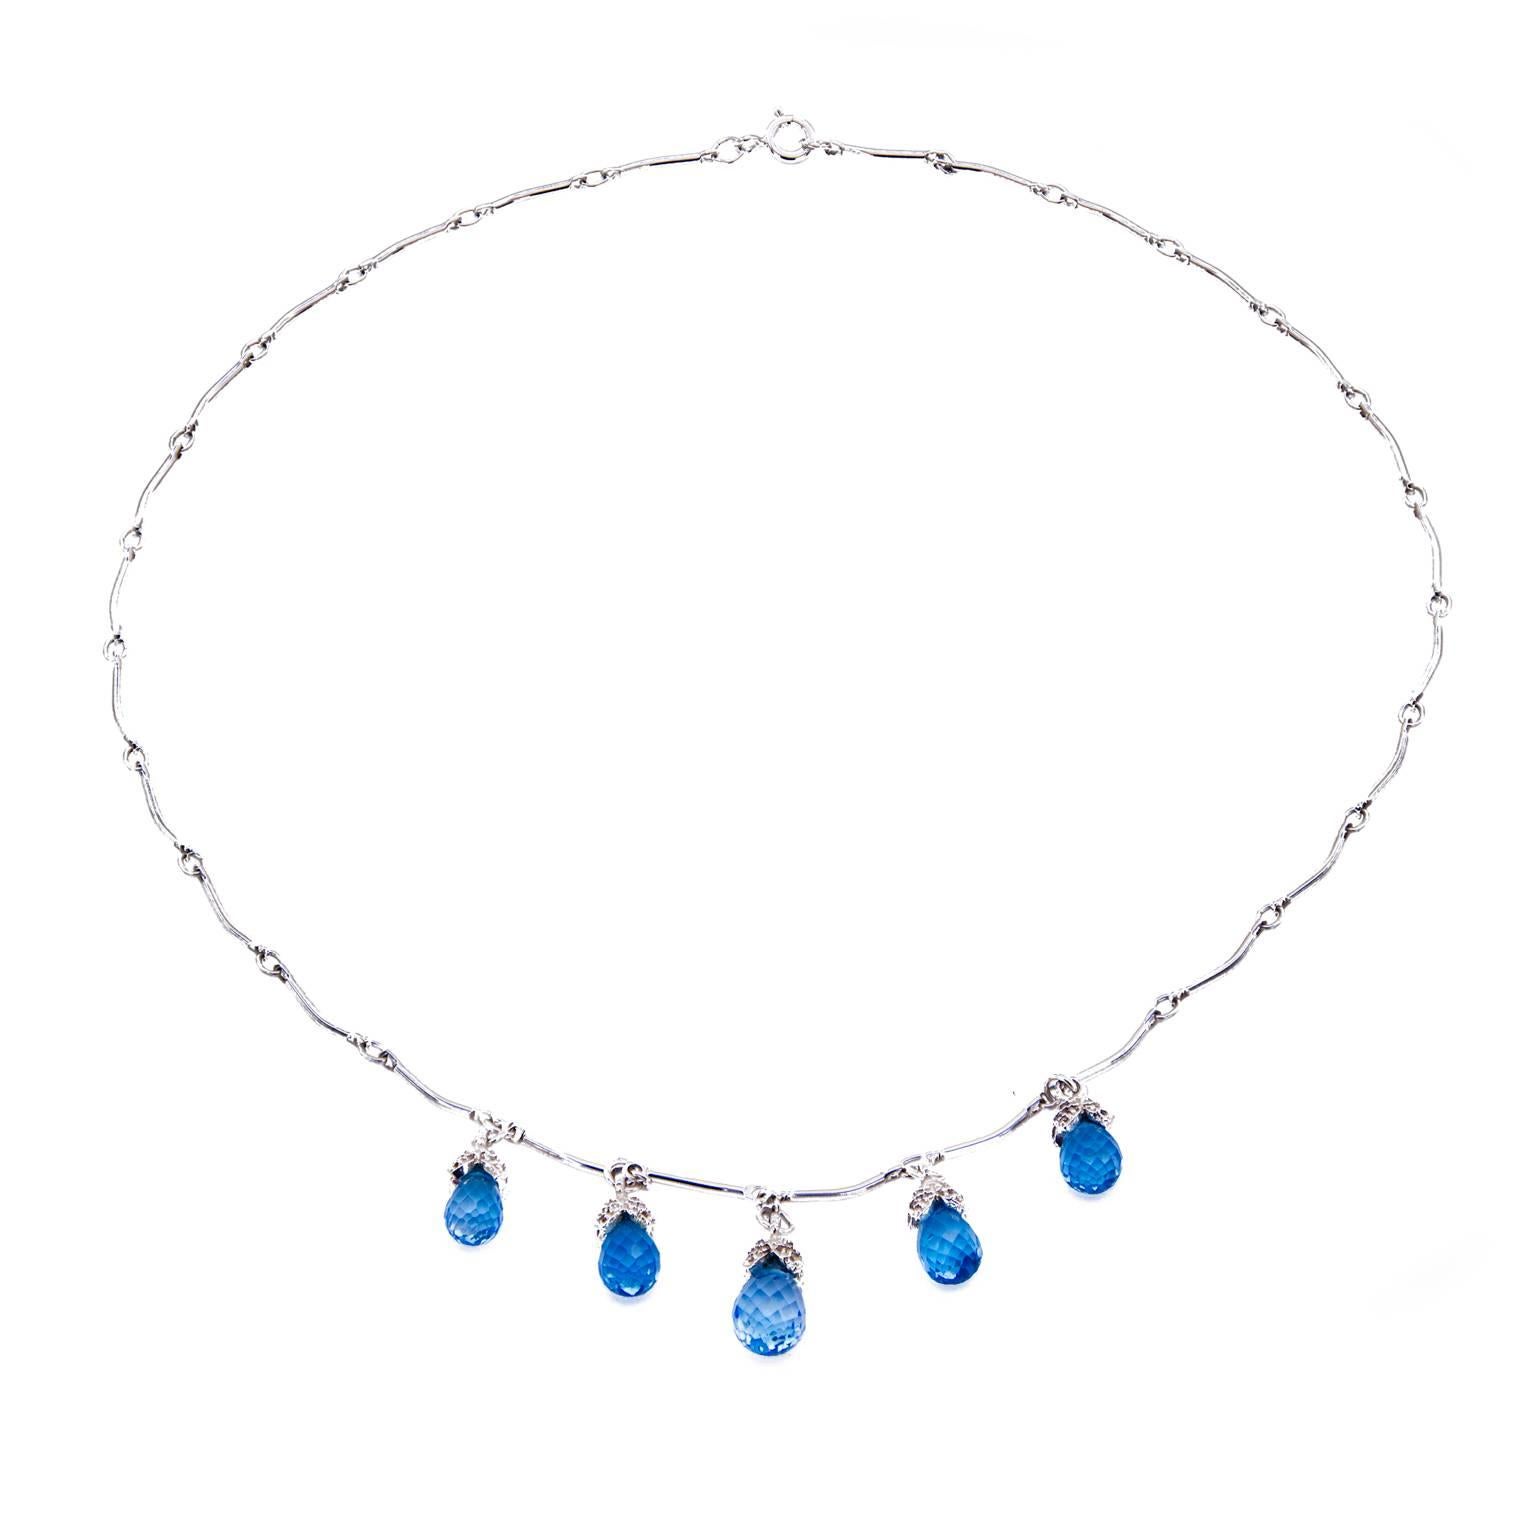 Romantic Blue Topaz and Diamond 'Droplets' Necklace